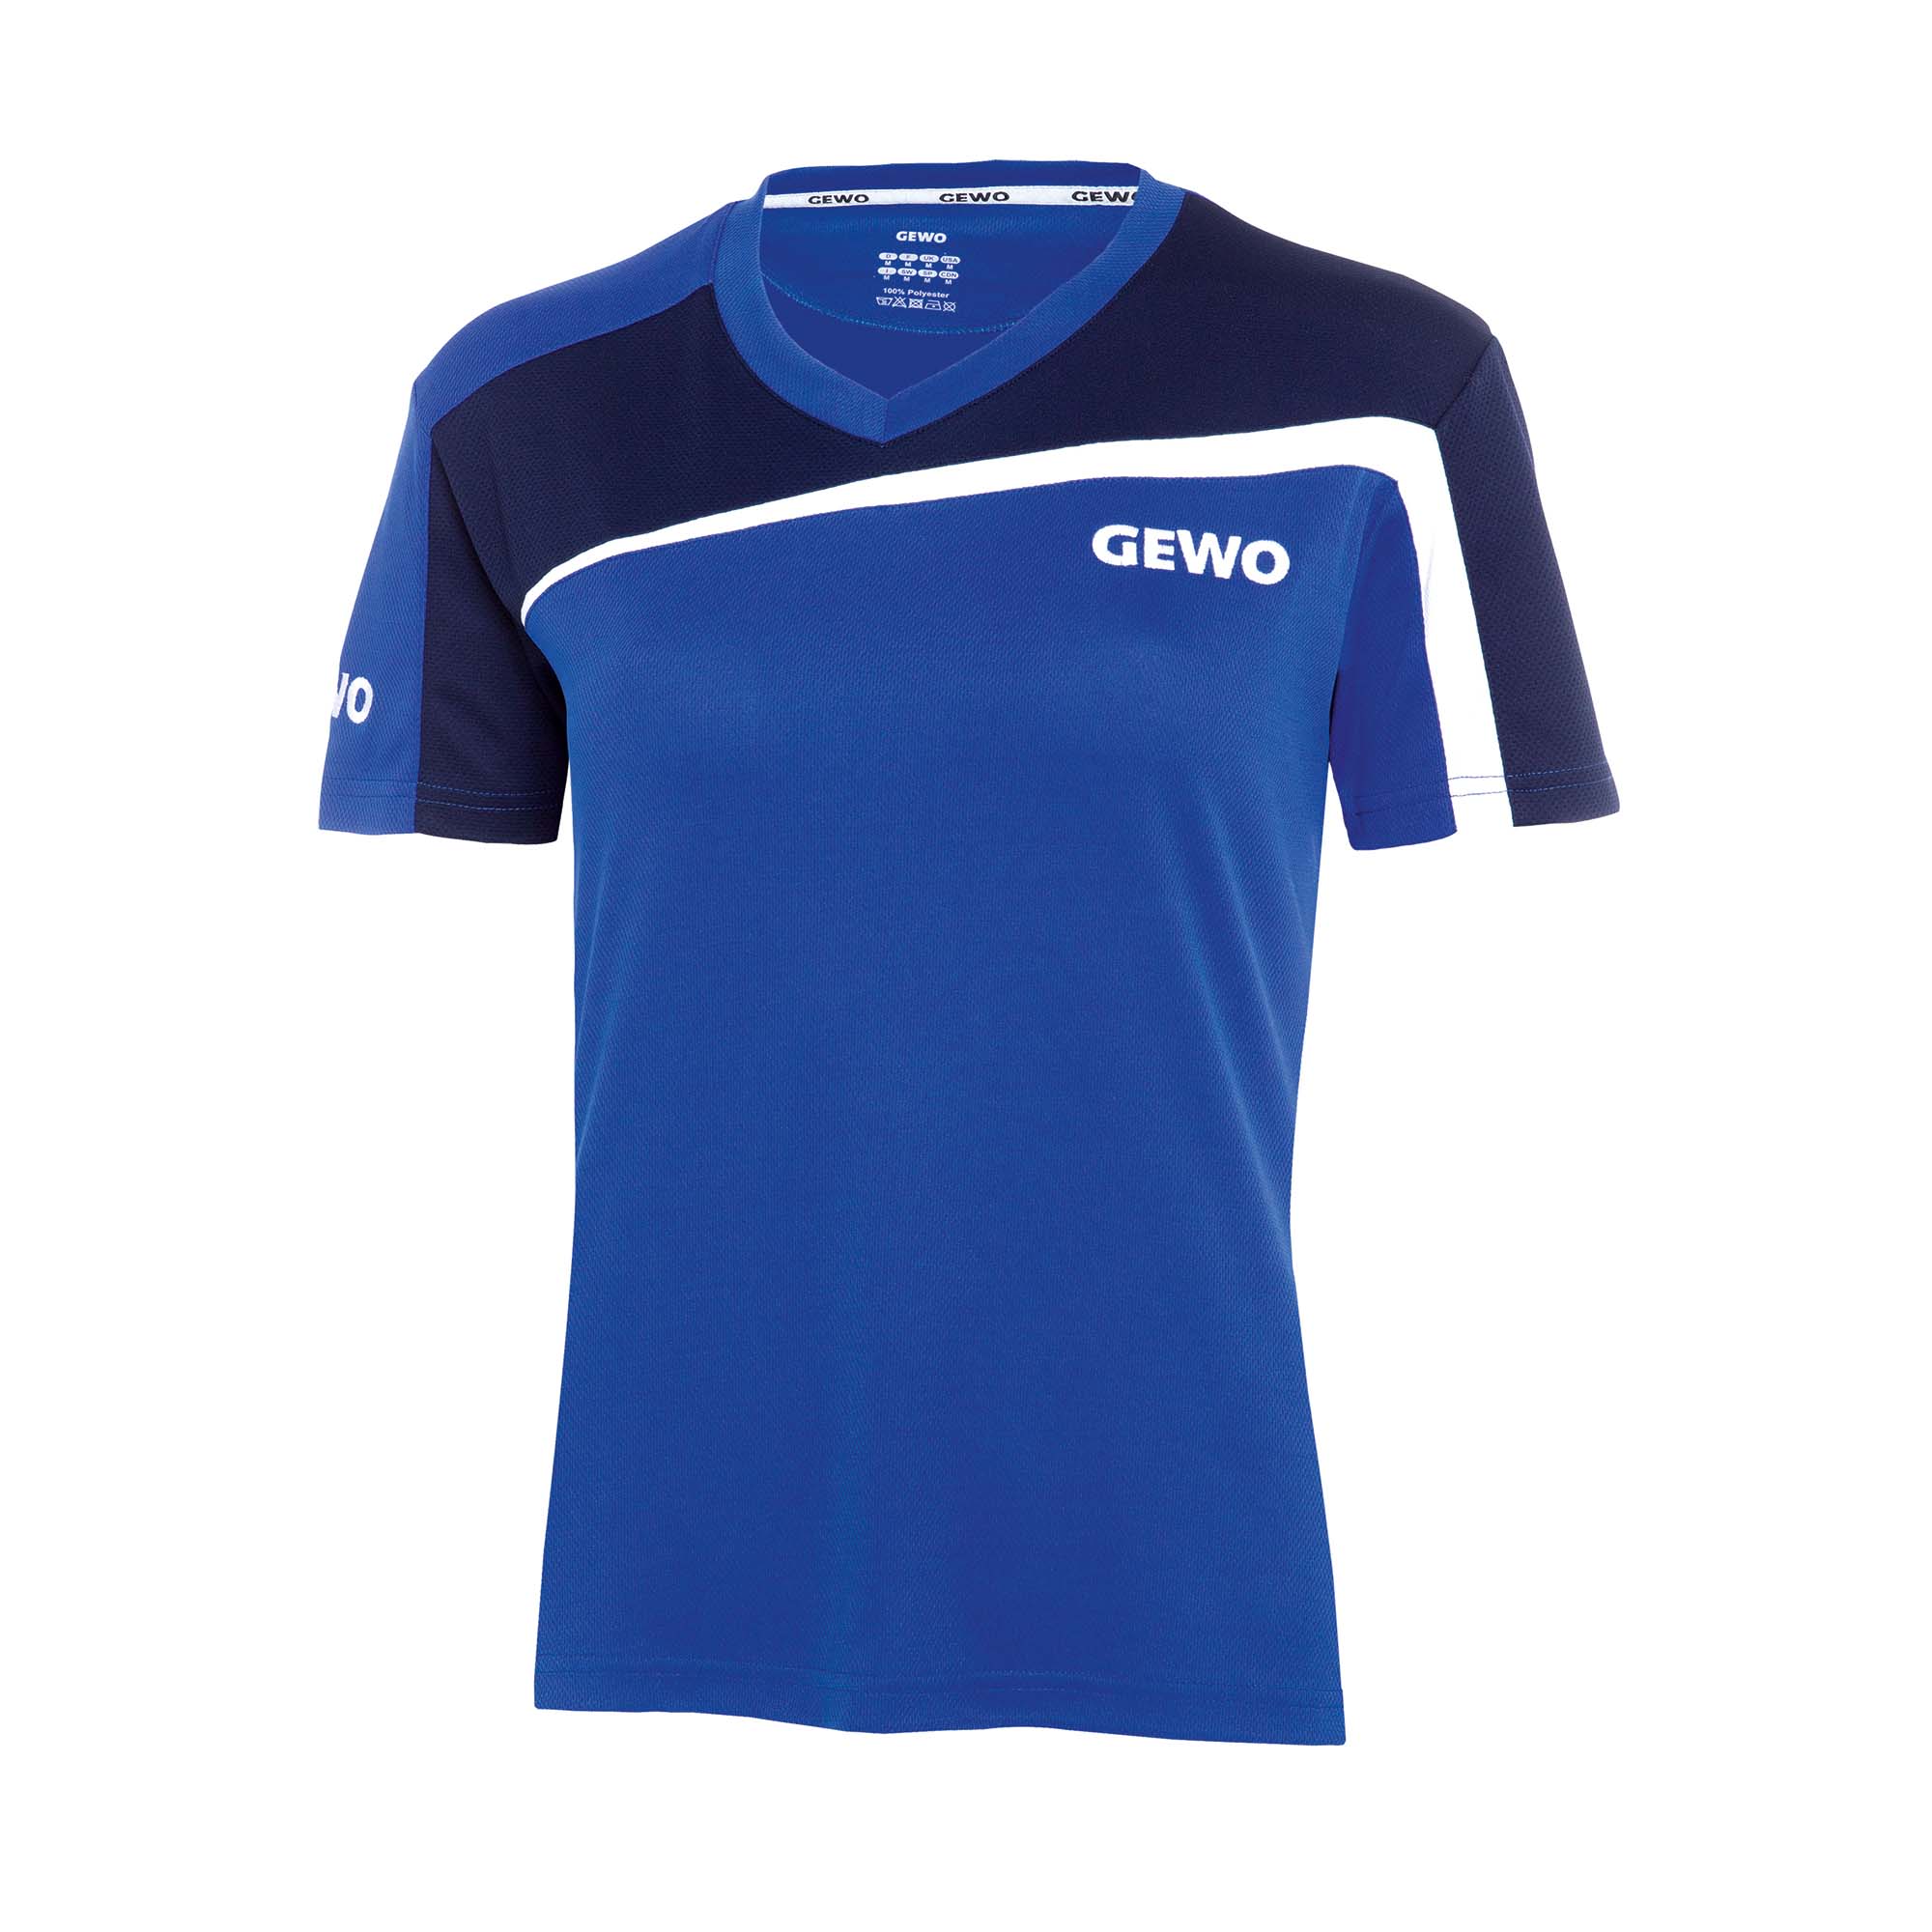 GEWO Lady Shirt Teramo S18-3  blue/navy XL